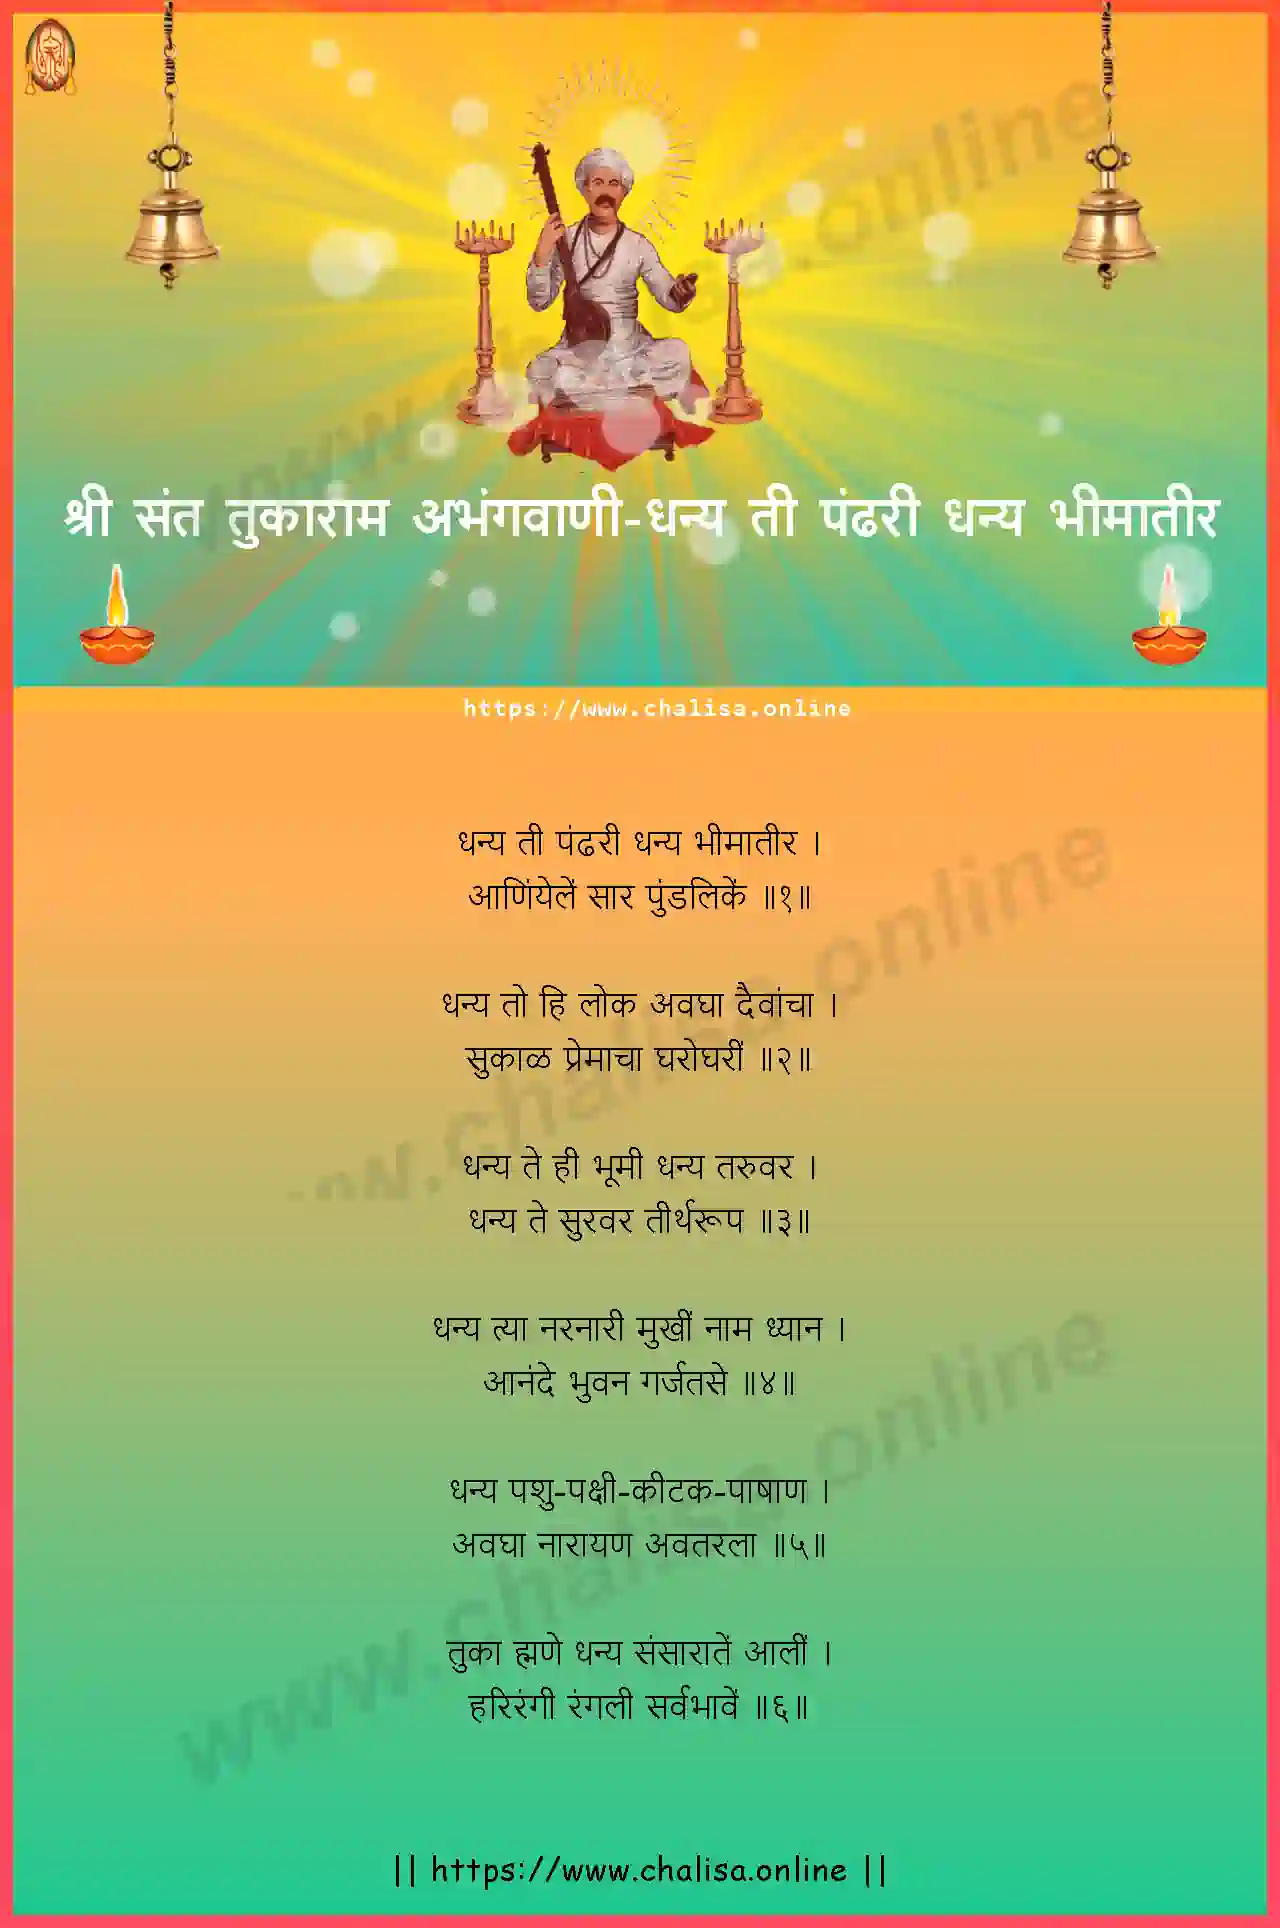 dhanya-ti-pandhari-dhanya-shri-sant-tukaram-abhang-marathi-lyrics-download